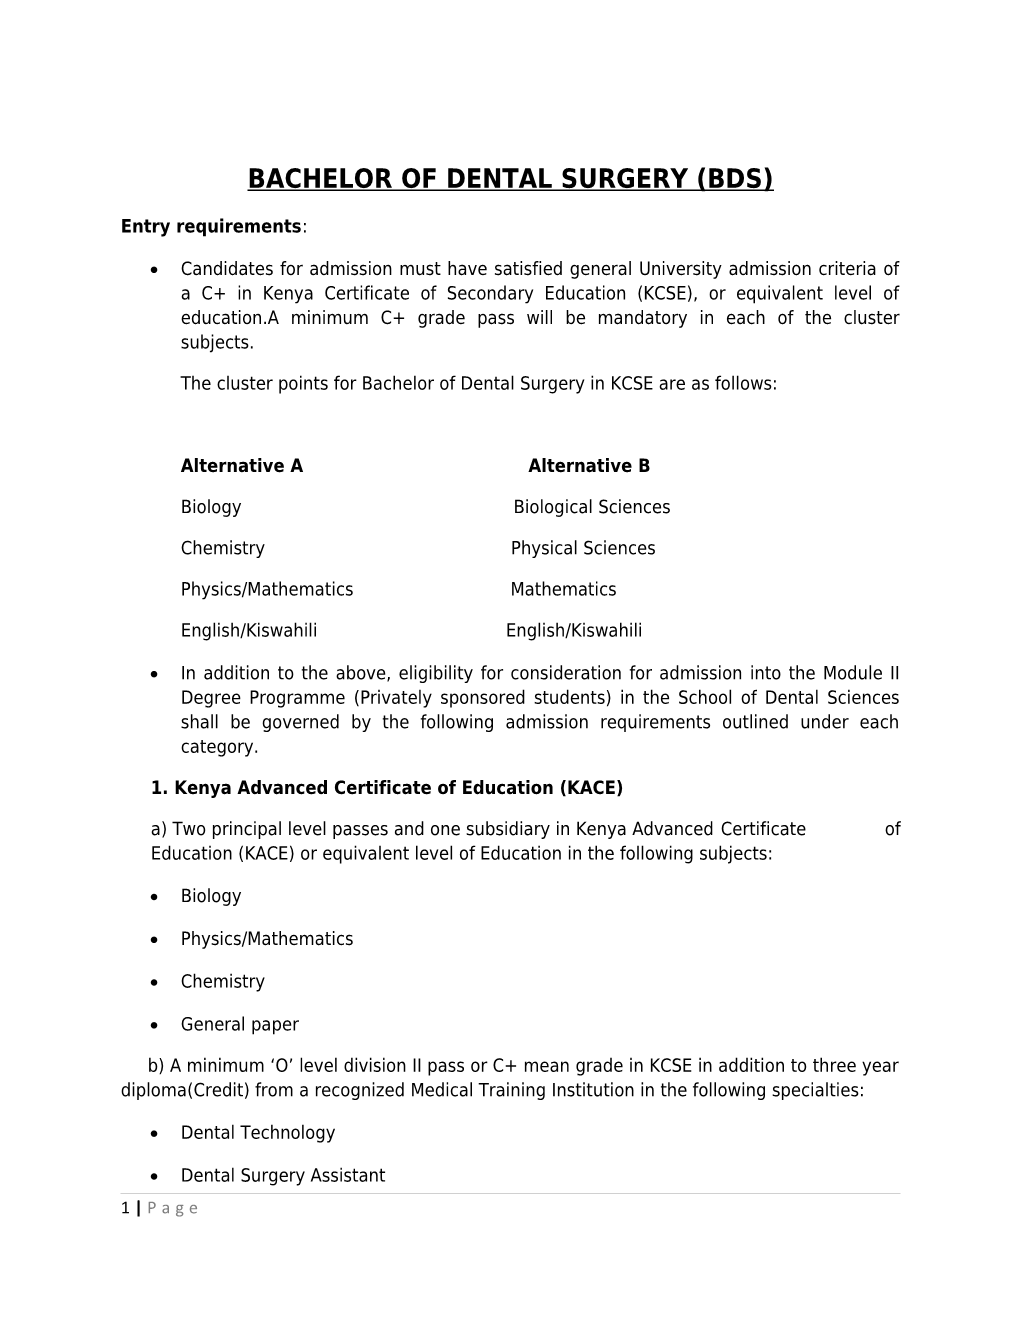 Bachelor of Dental Surgery (Bds)